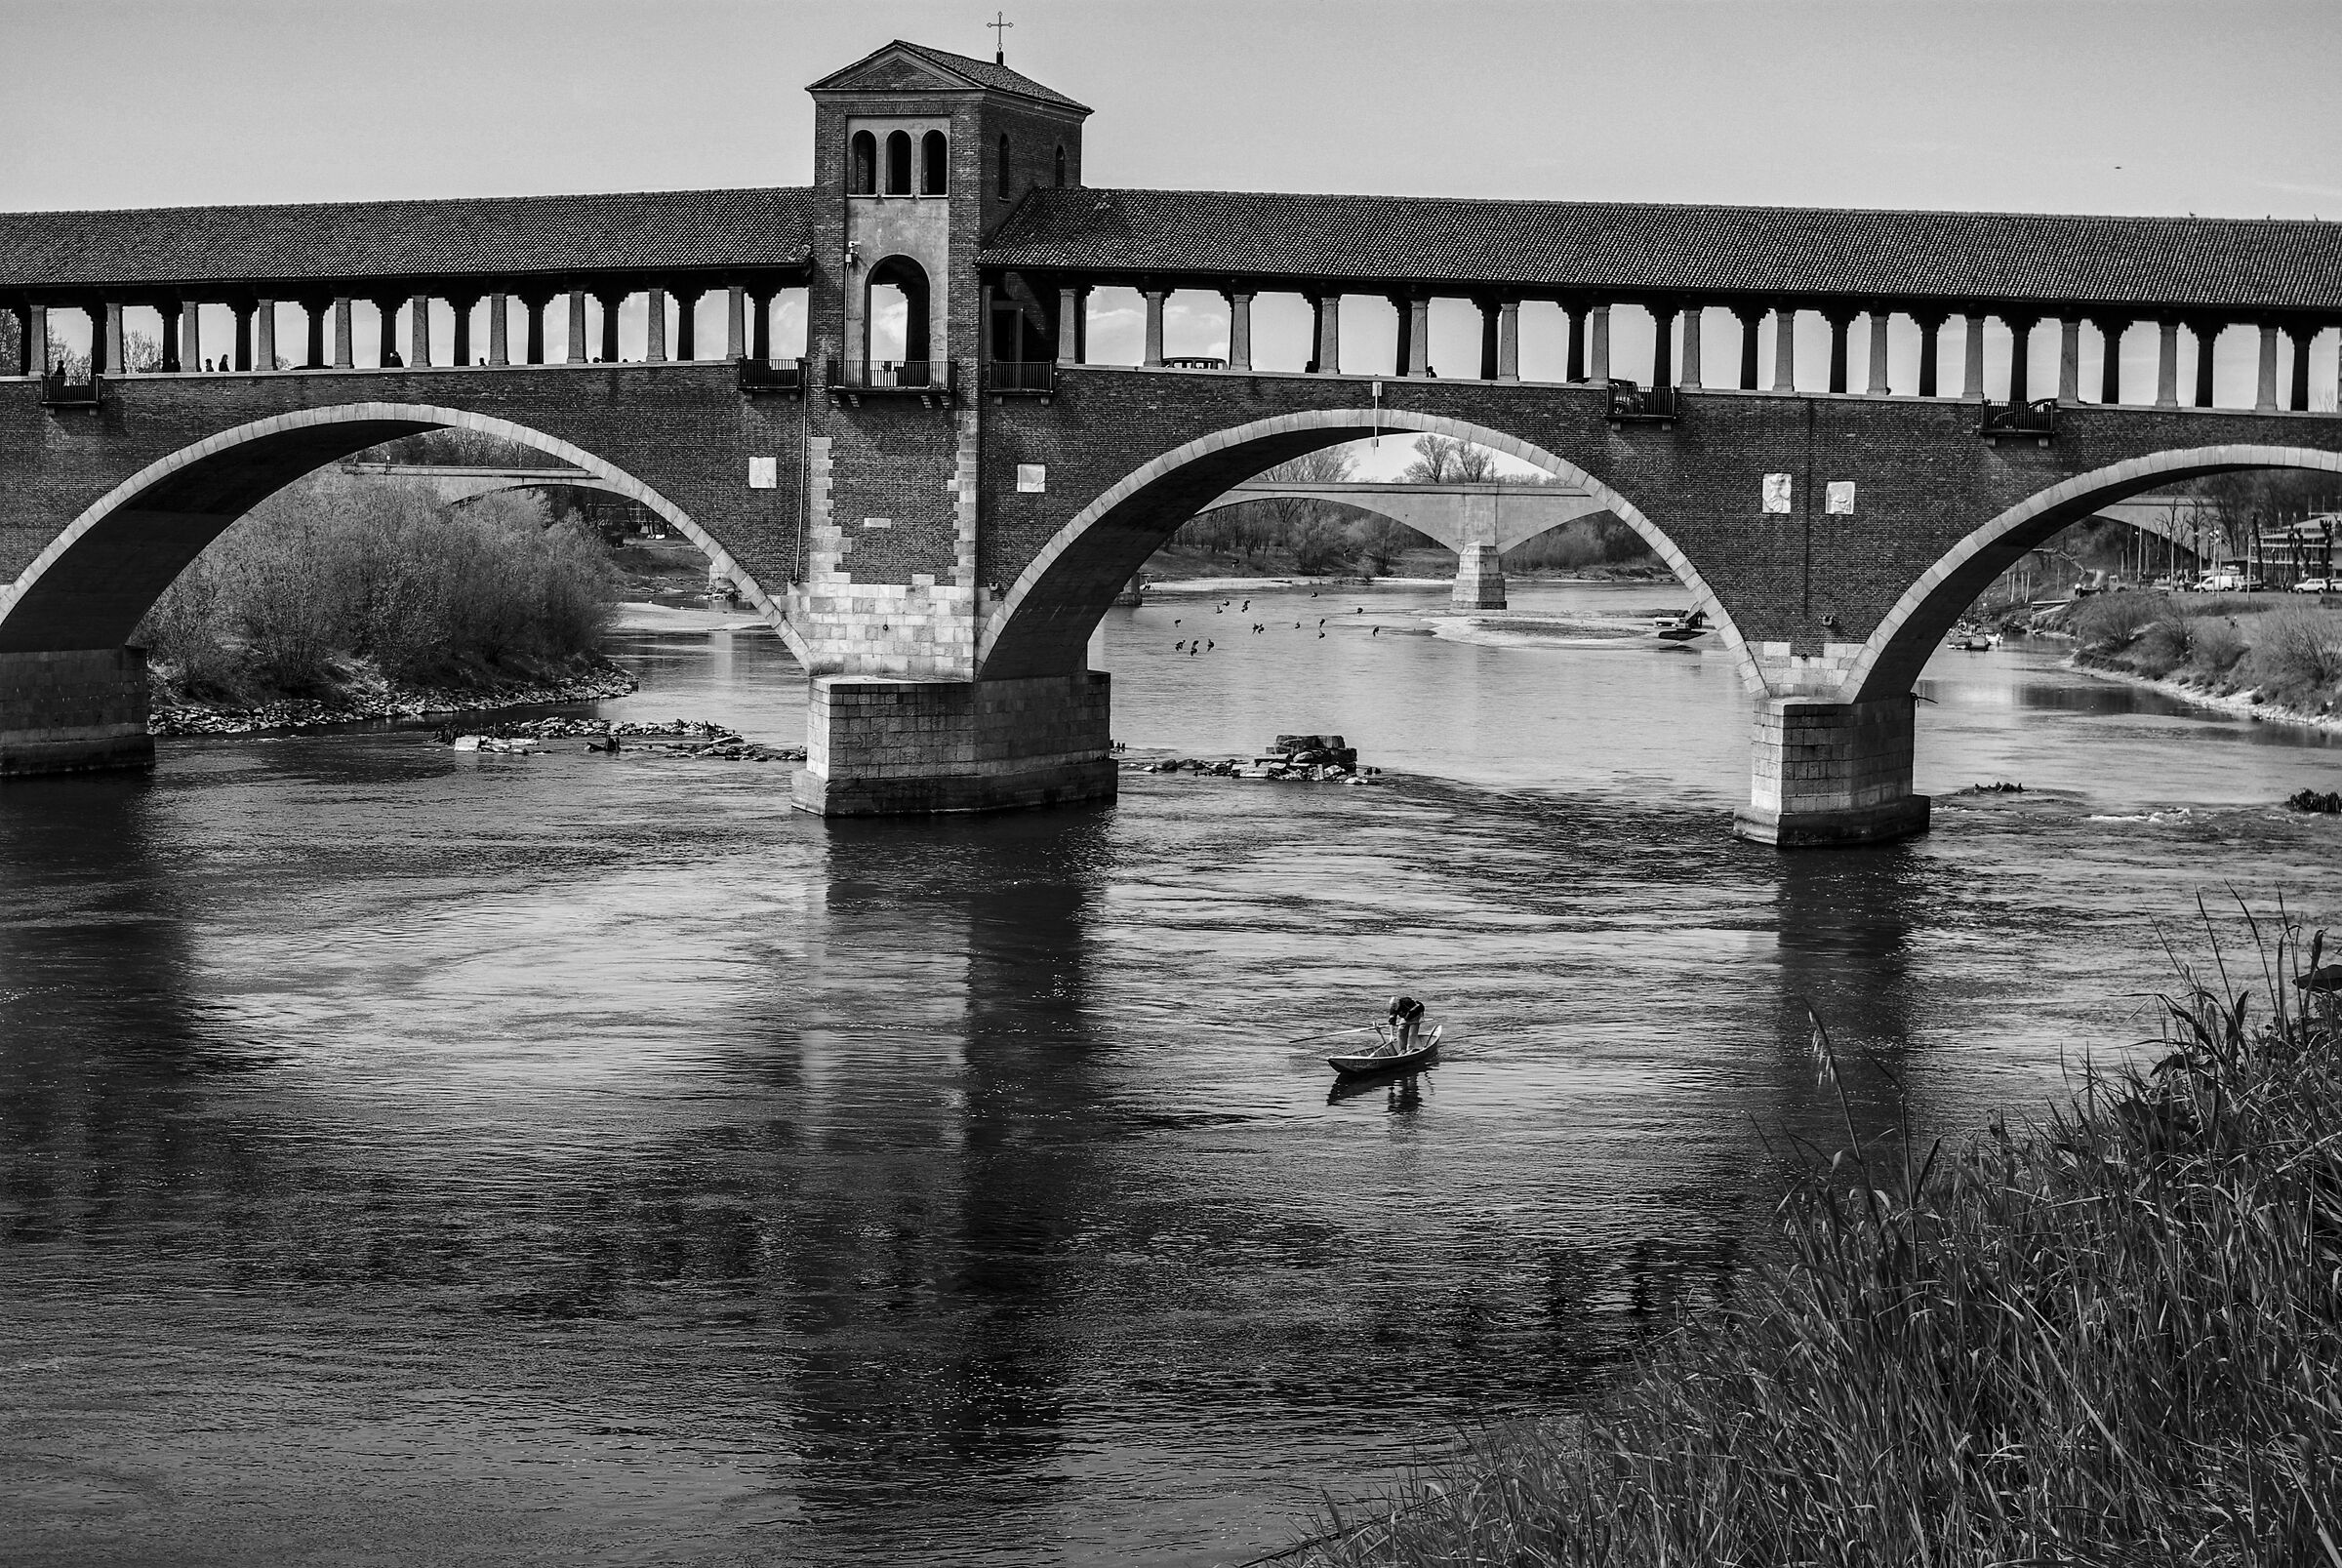 Pavia covered bridge...